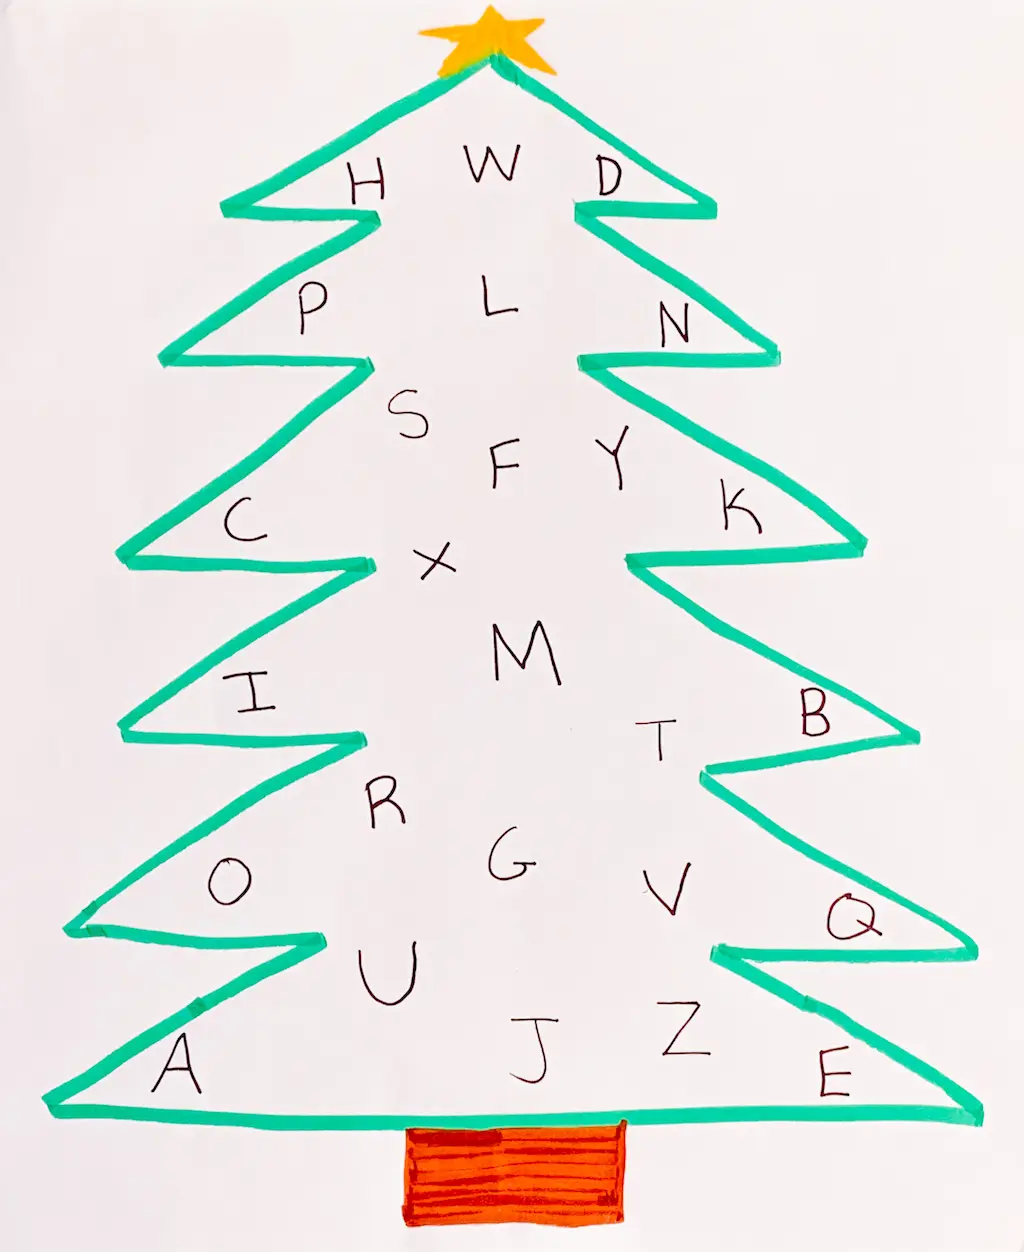 Letter Christmas Tree - DIY - Playgarden Online